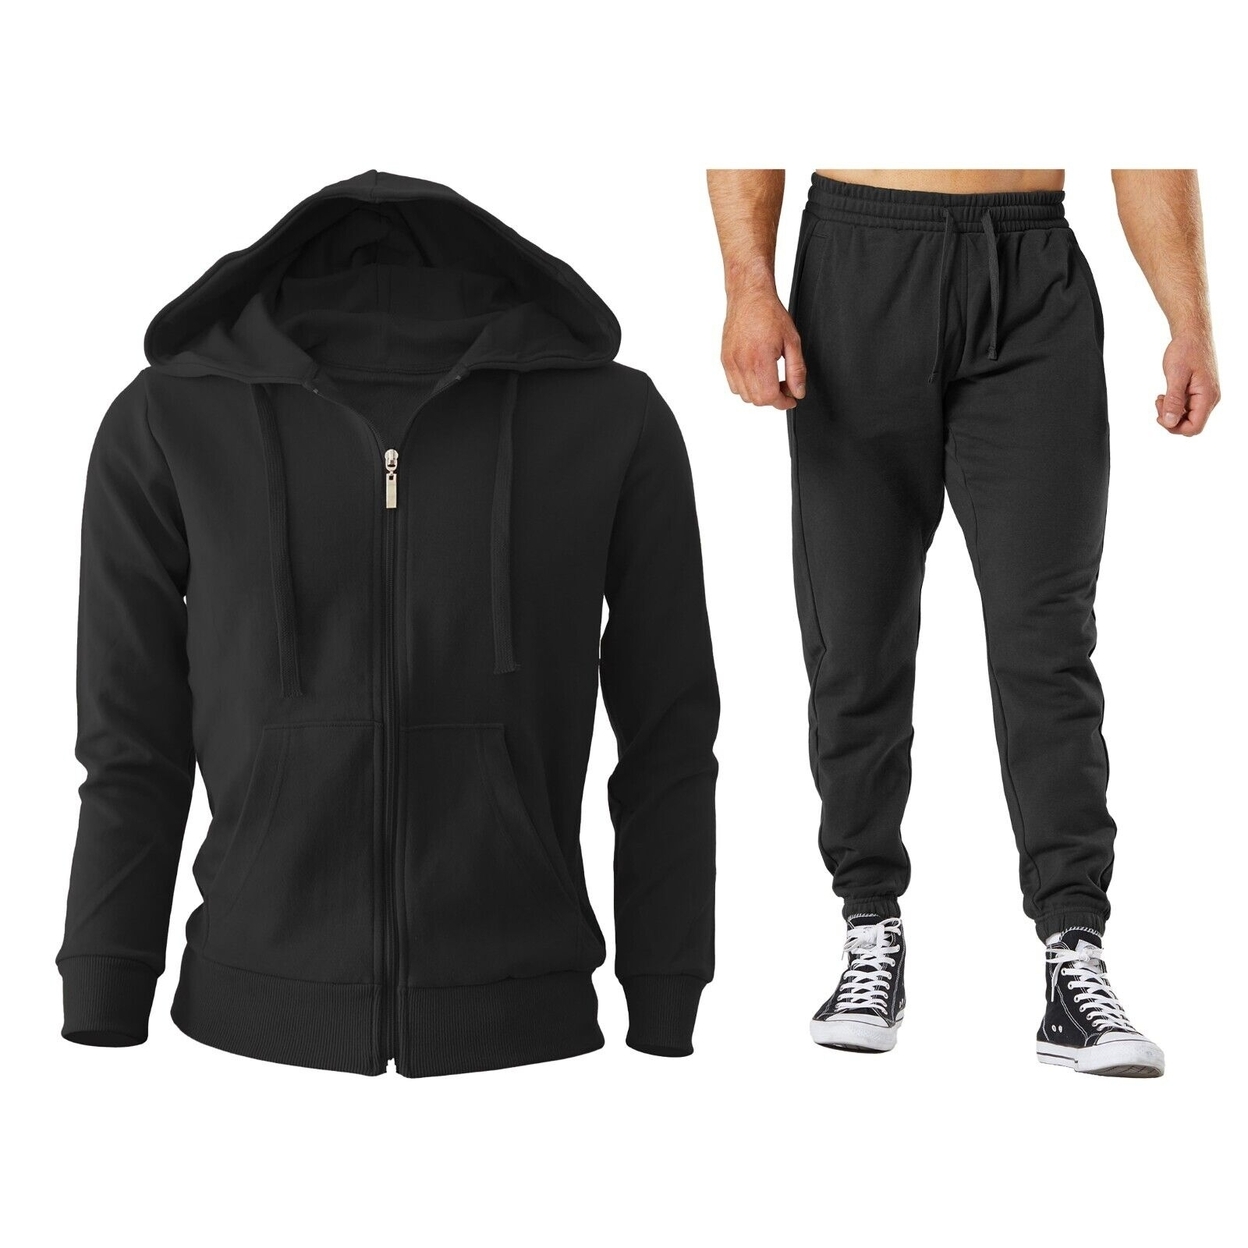 4-Piece: Men's Winter Warm Cozy Athletic Multi-Pockets BIG & TALL Sweatsuit Set - Black, Xx-large